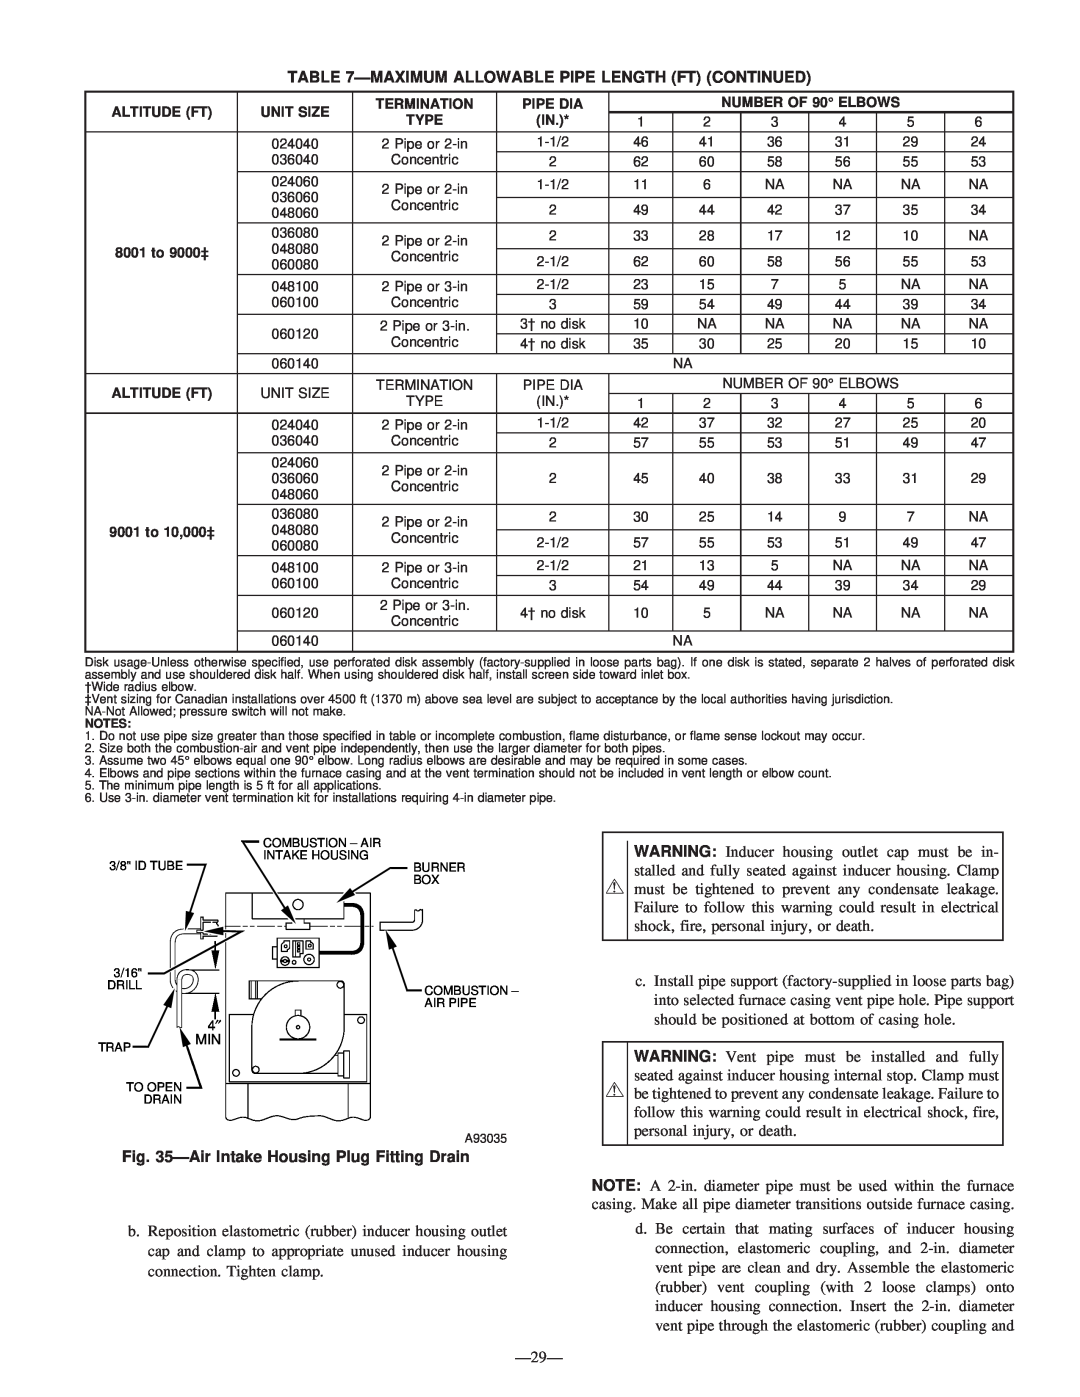 Bryant 340MAV instruction manual AirIntake Housing Plug Fitting Drain, Maximumallowable Pipe Length Ft Continued 